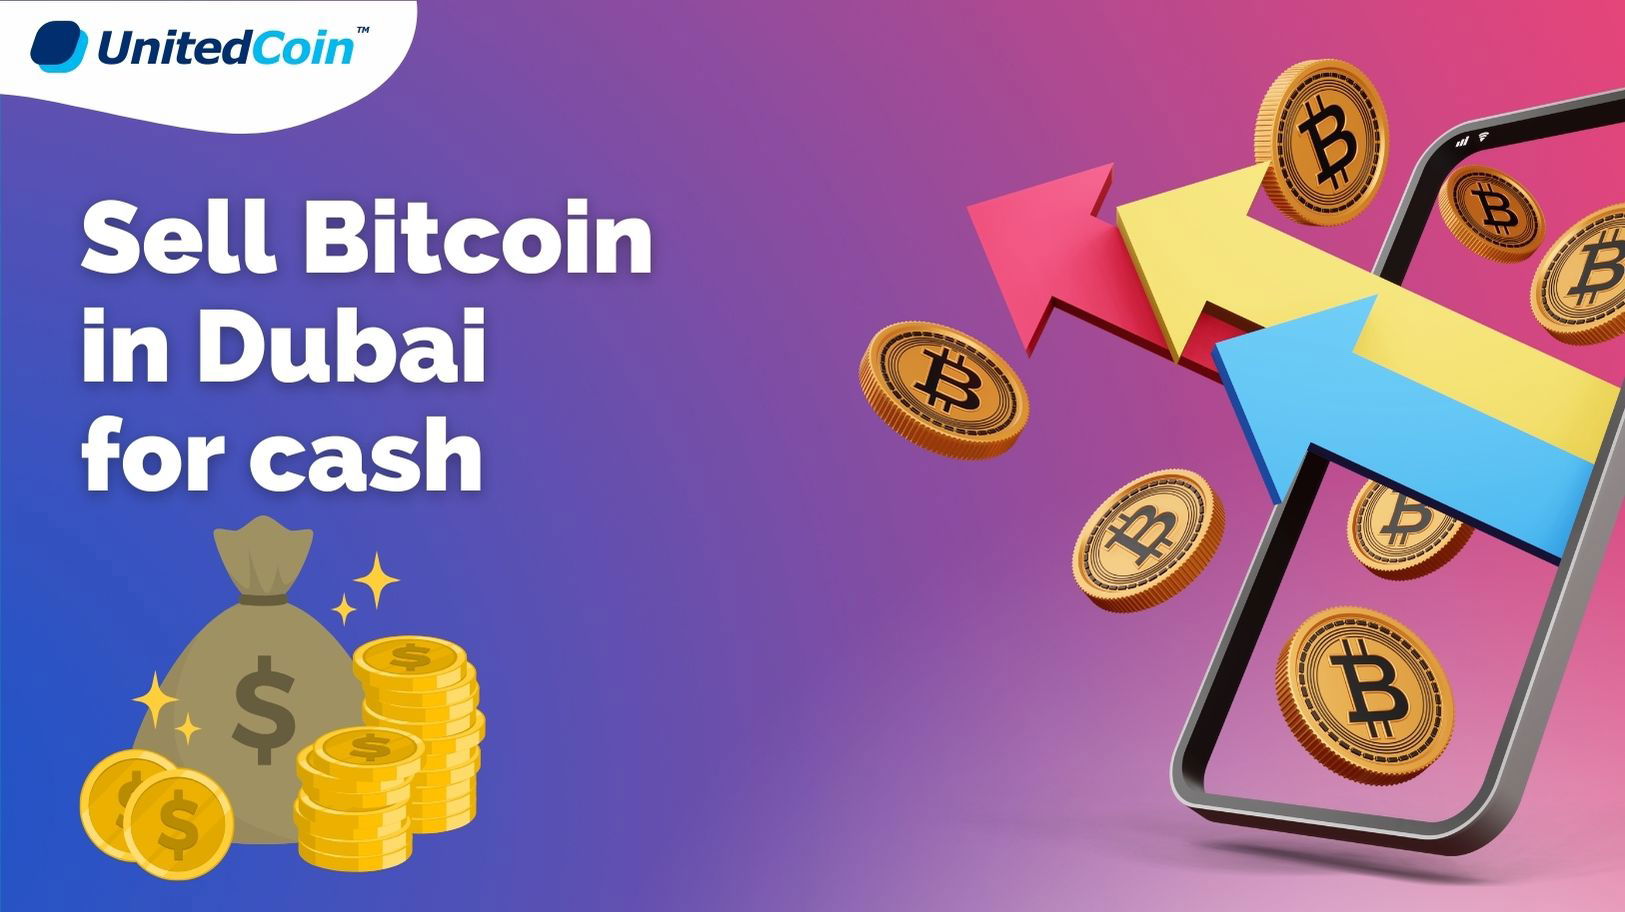 Sell Bitcoin in Dubai for cash